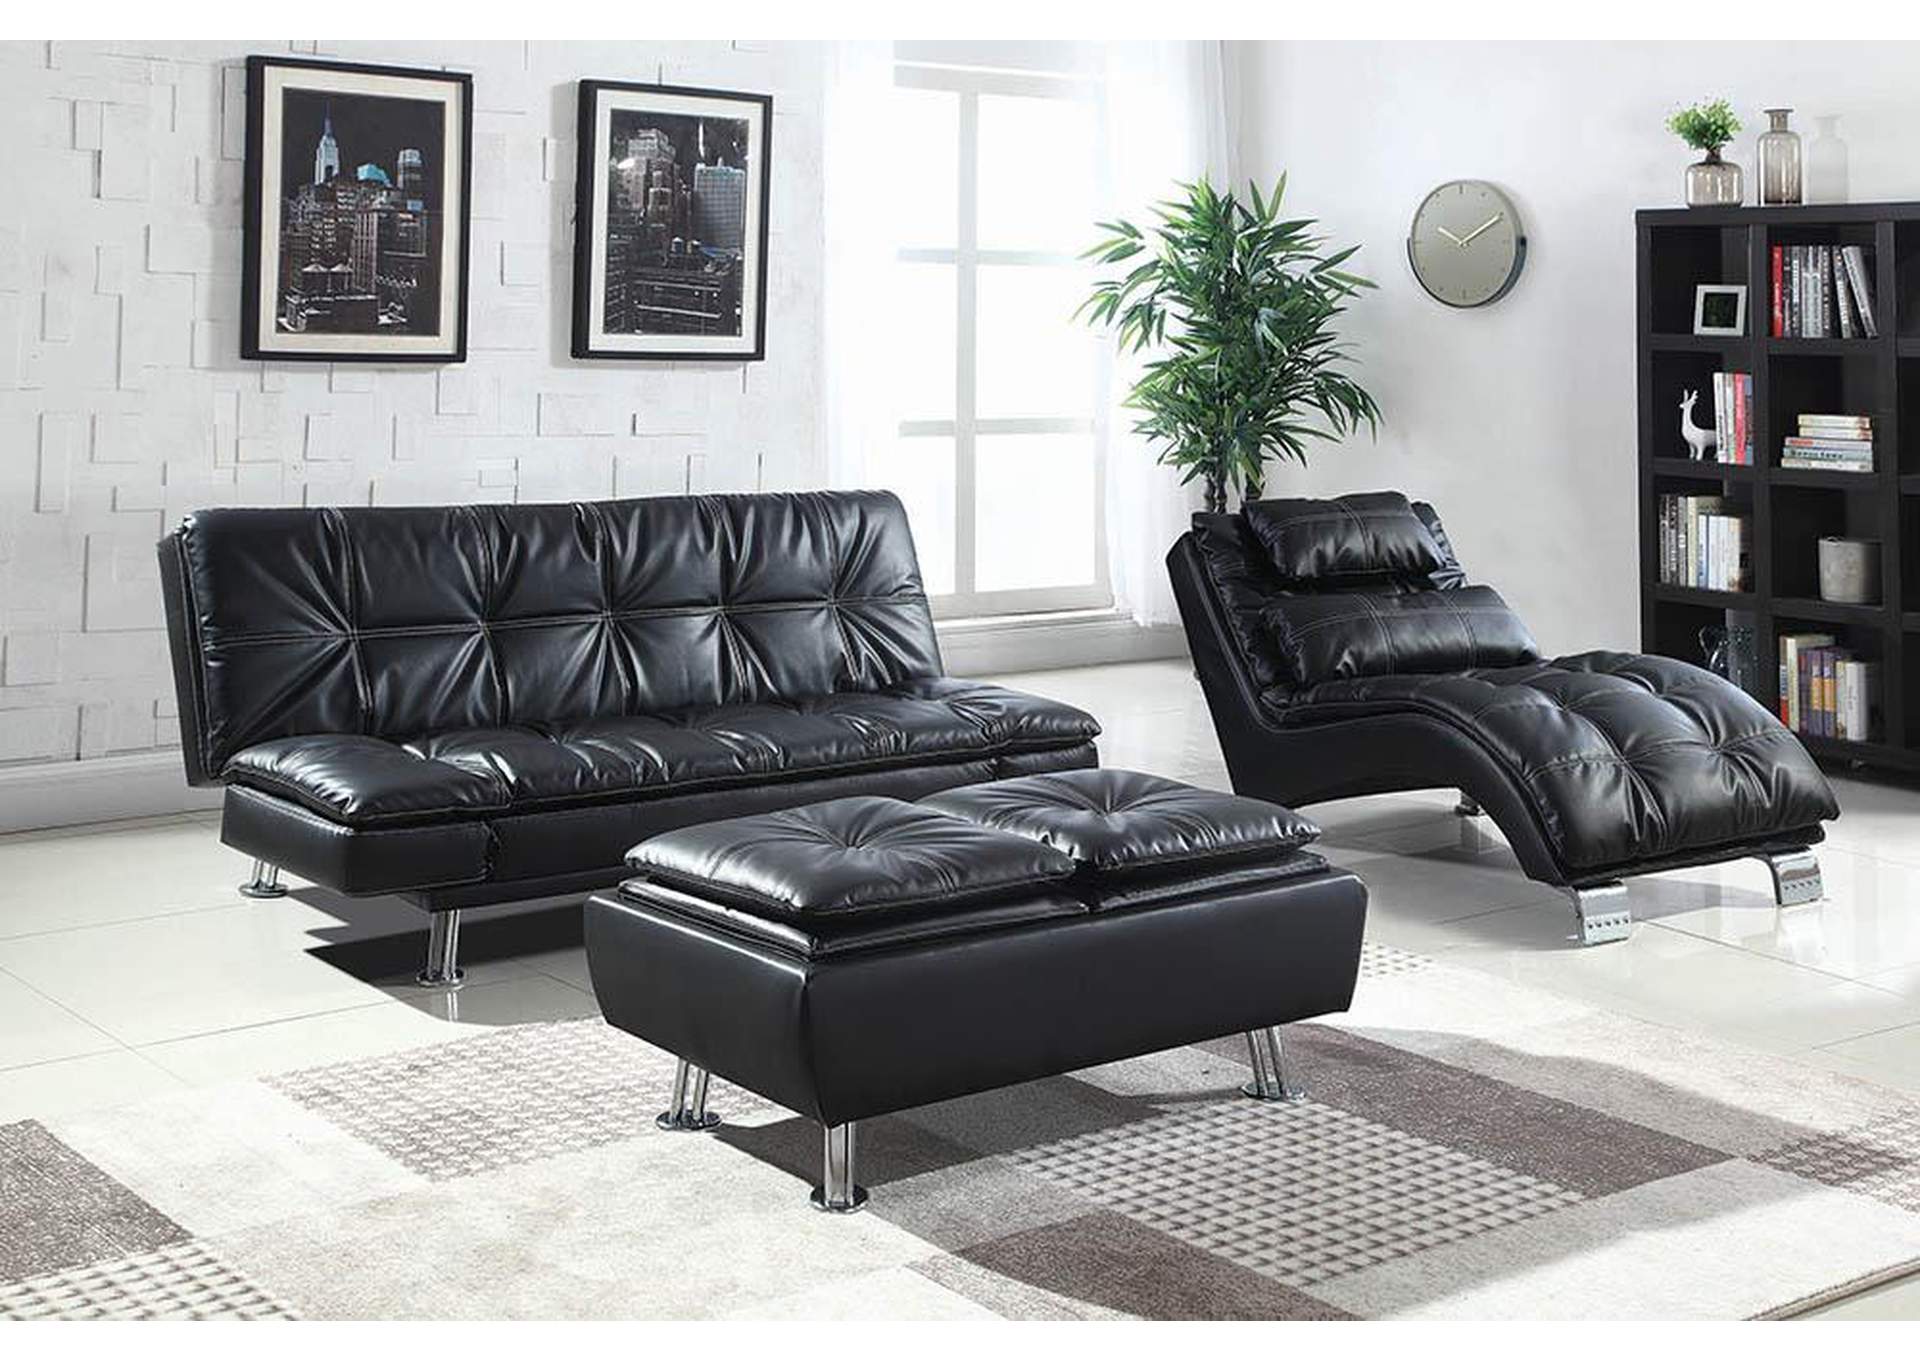 Ny Furniture Direct Freeport Ny Black Chaise